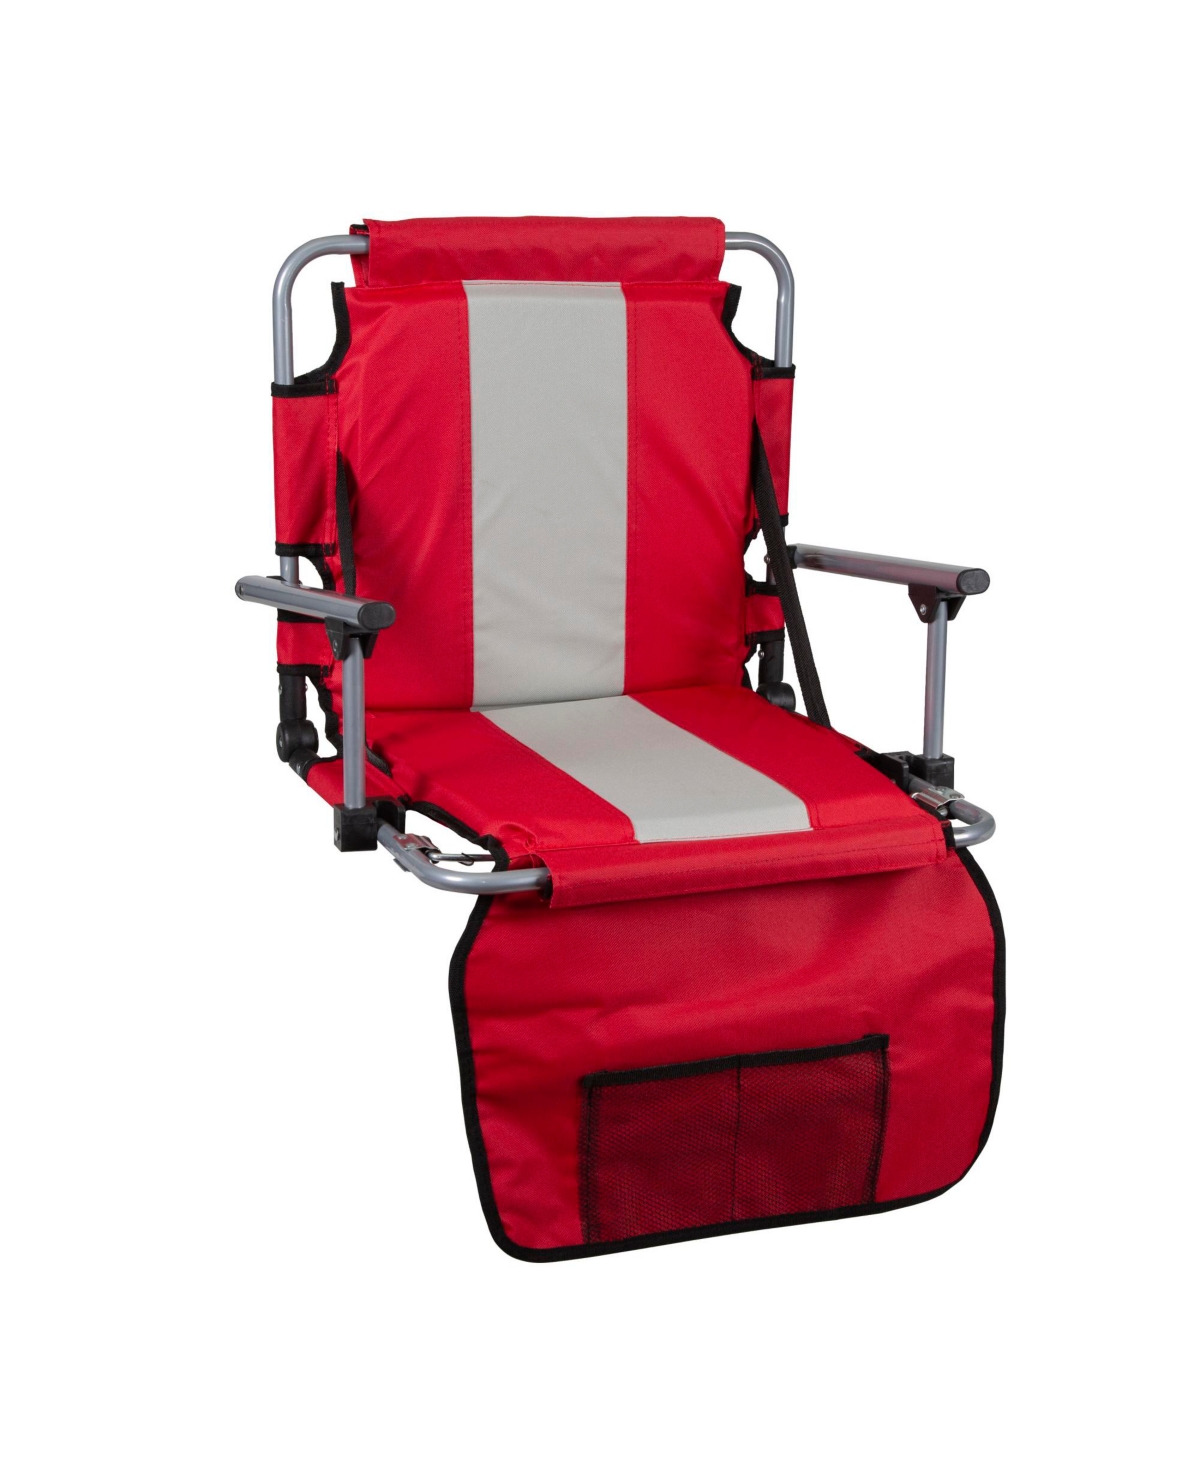 Tubular Frame Folding Stadium Seat with Arms - Red/Tan - Red